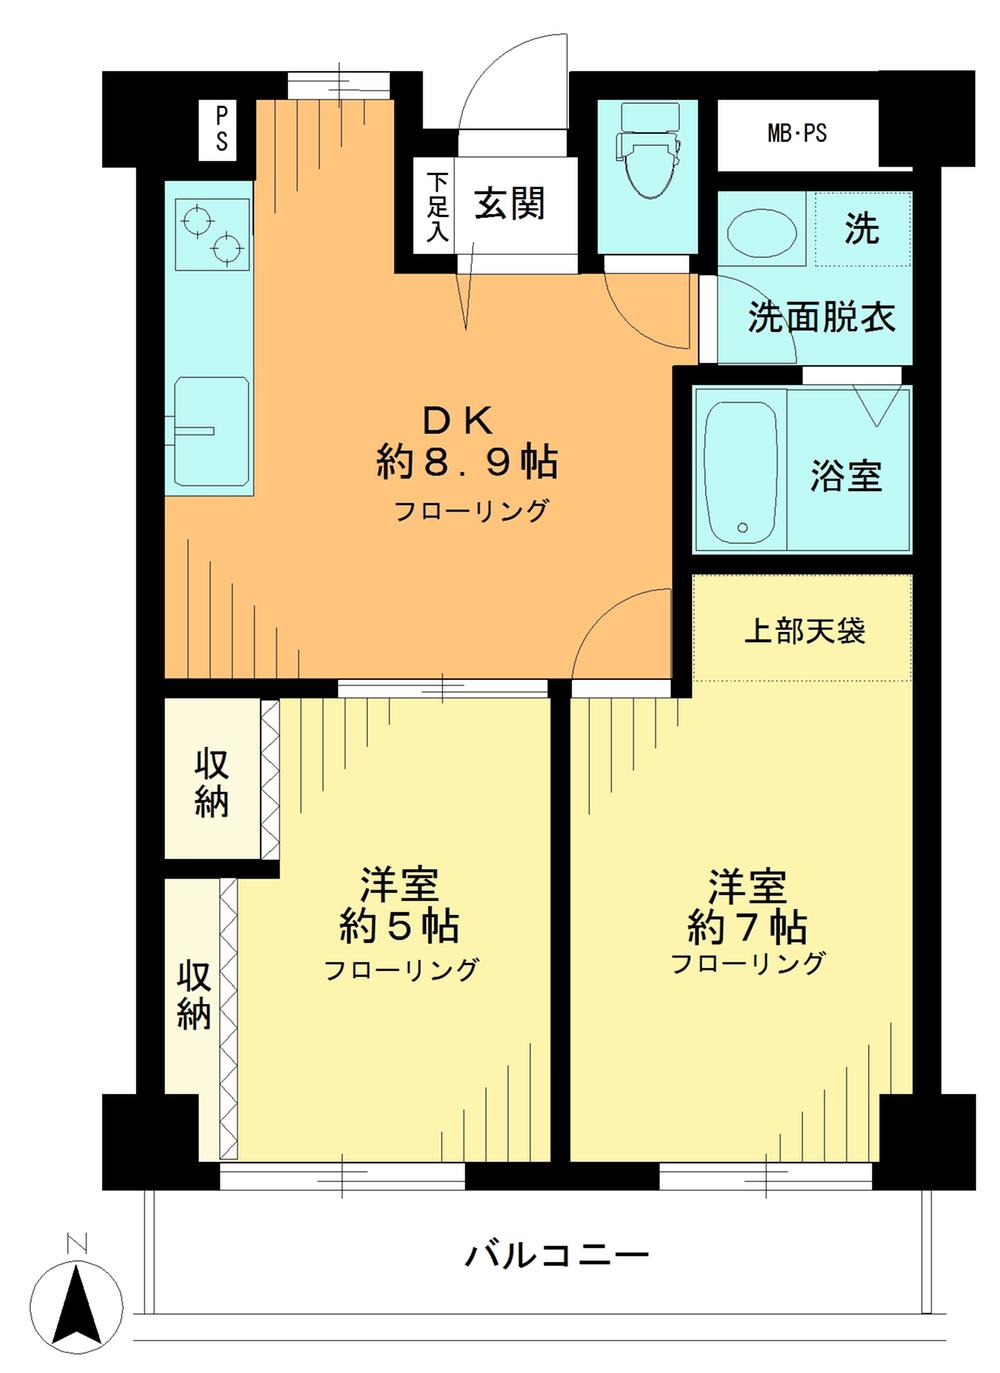 Floor plan. 2DK, Price 17,900,000 yen, Occupied area 45.65 sq m , Balcony area 5.78 sq m